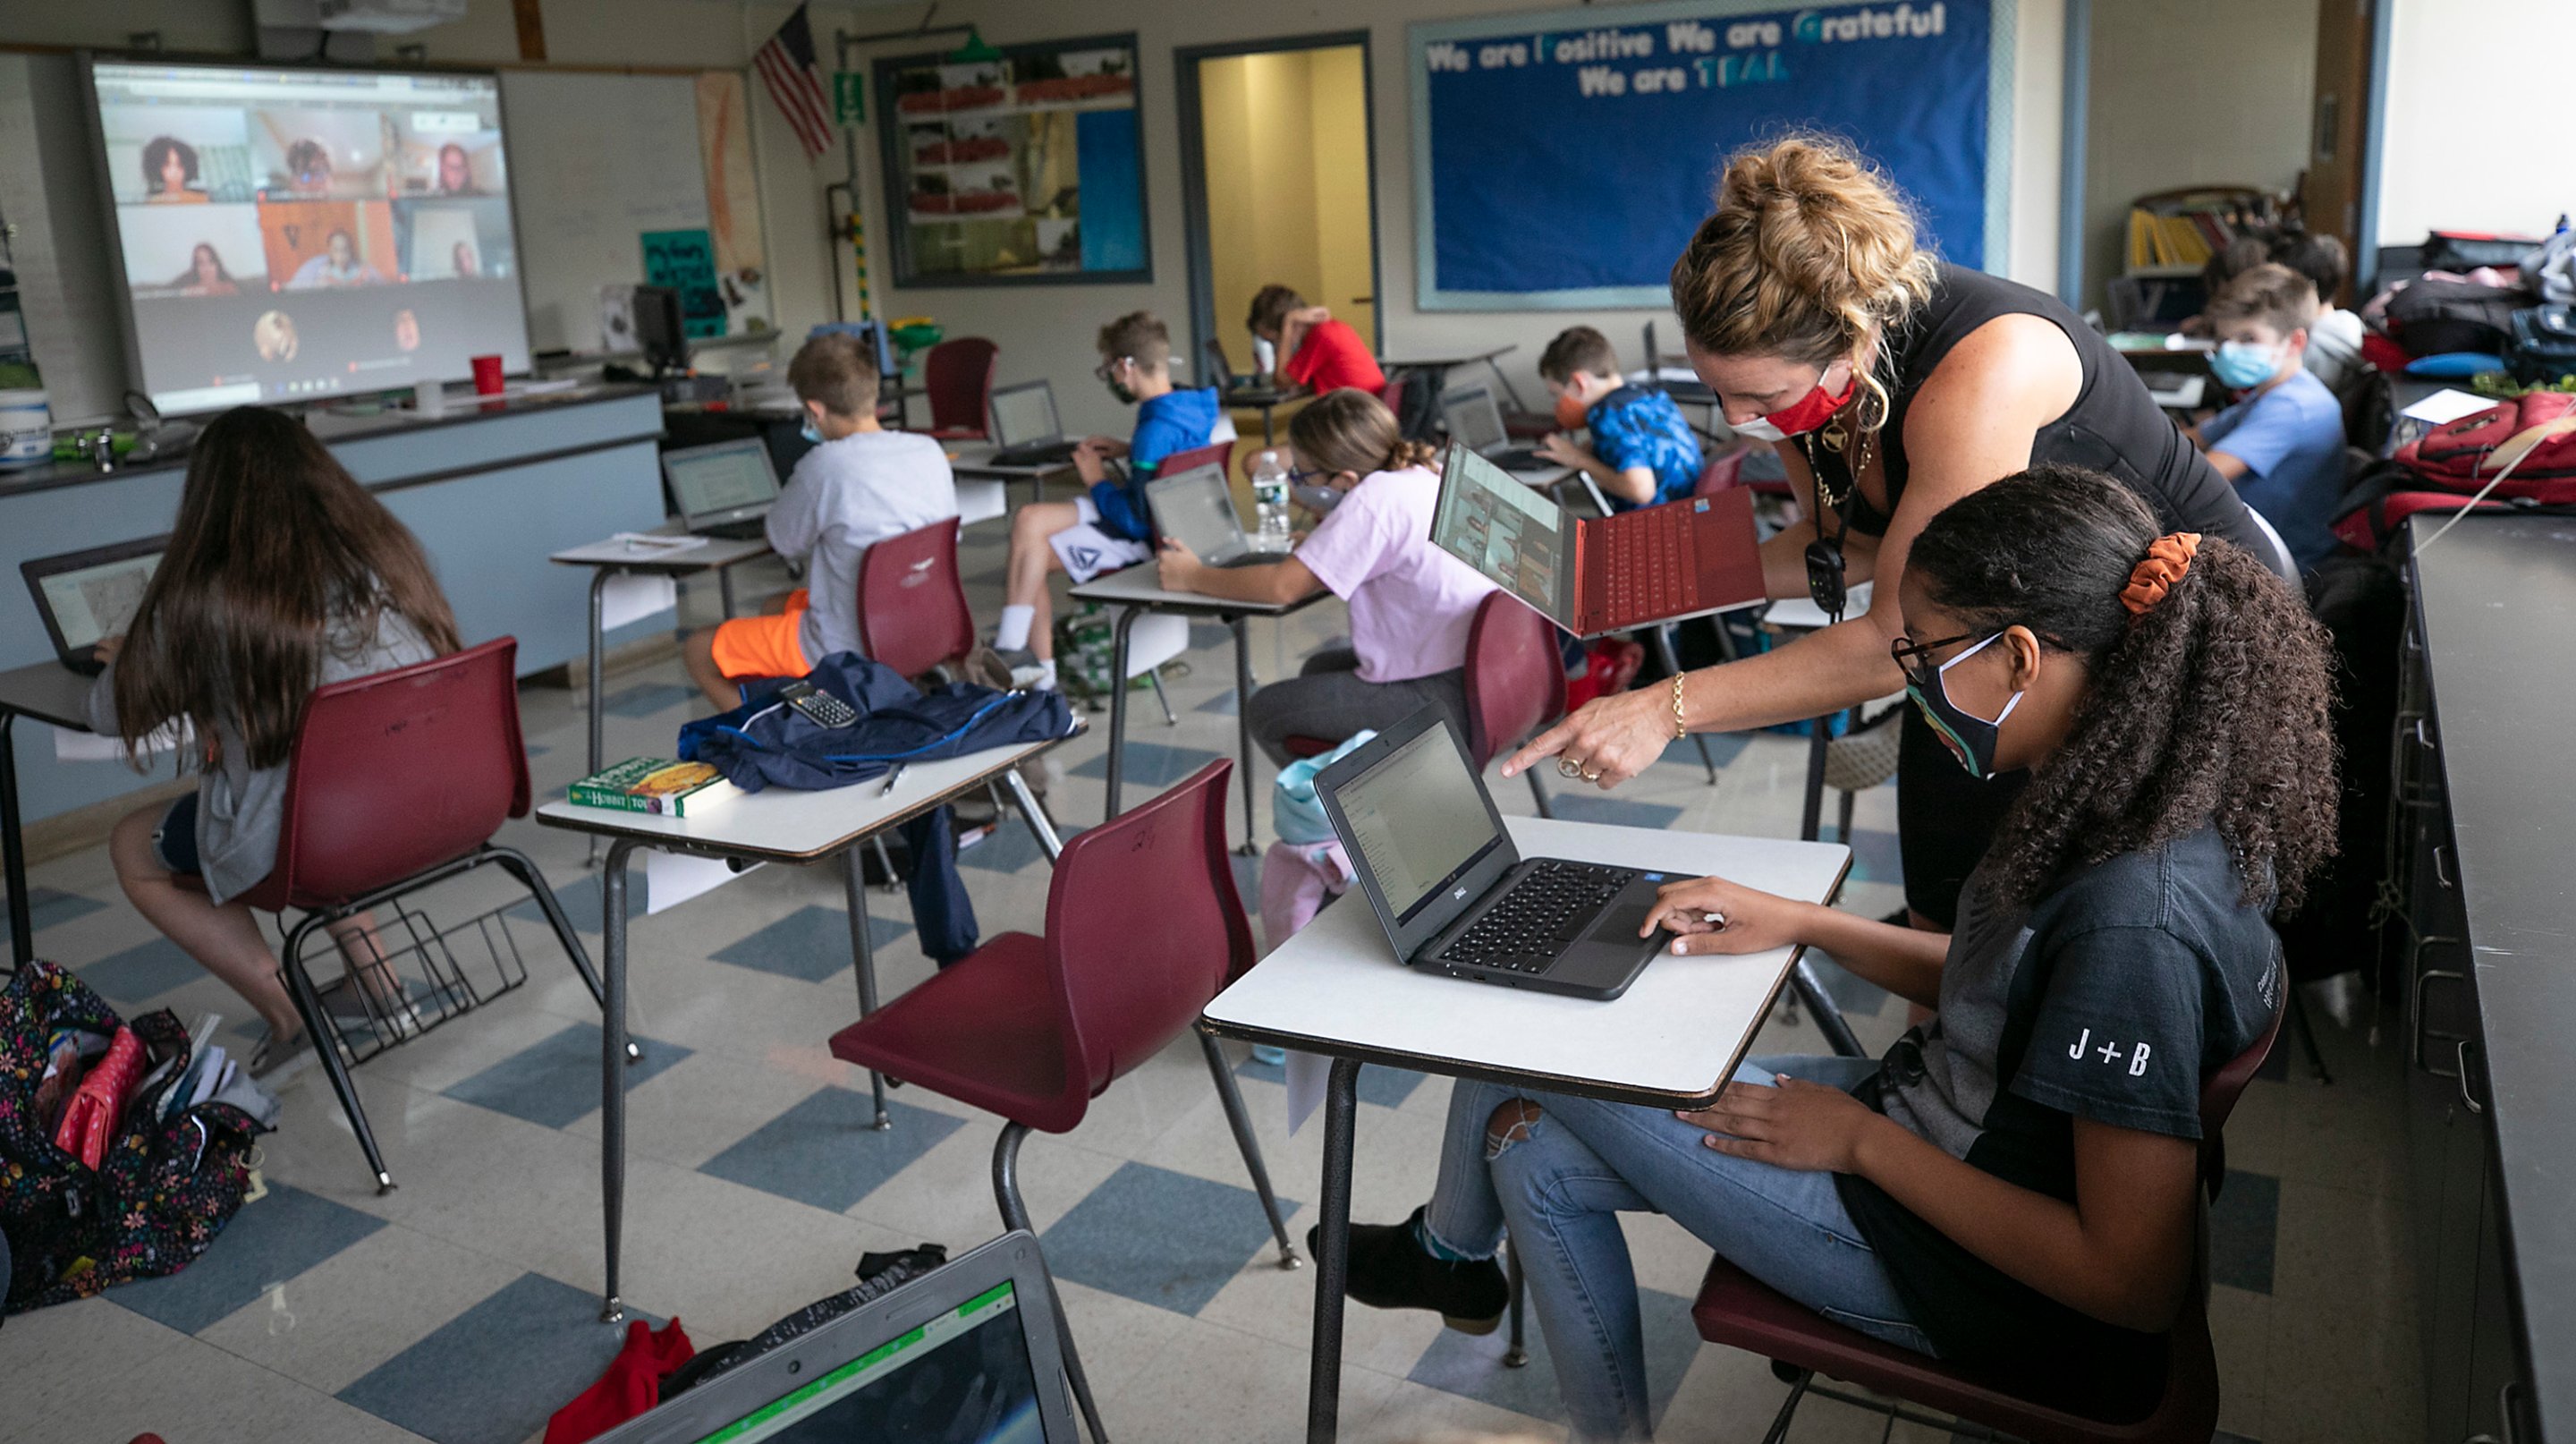 Google Debuts Classroom, An Education Platform For Teacher-Student